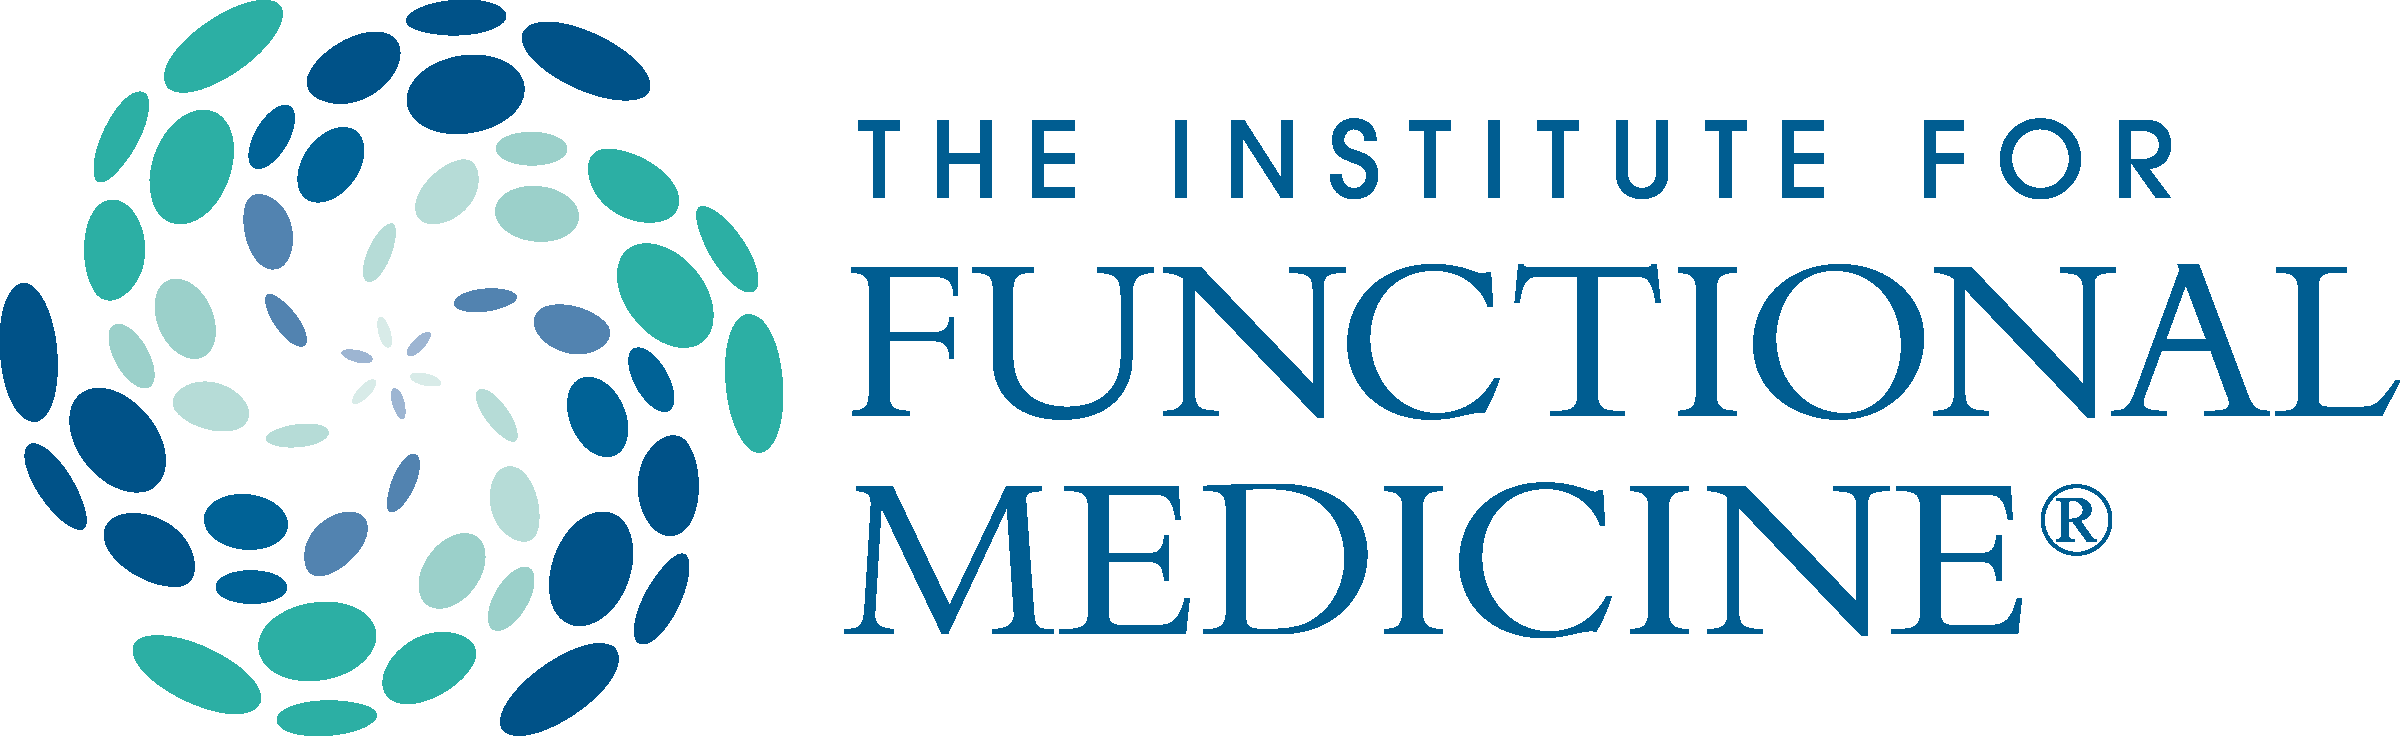 The Institute for Fu